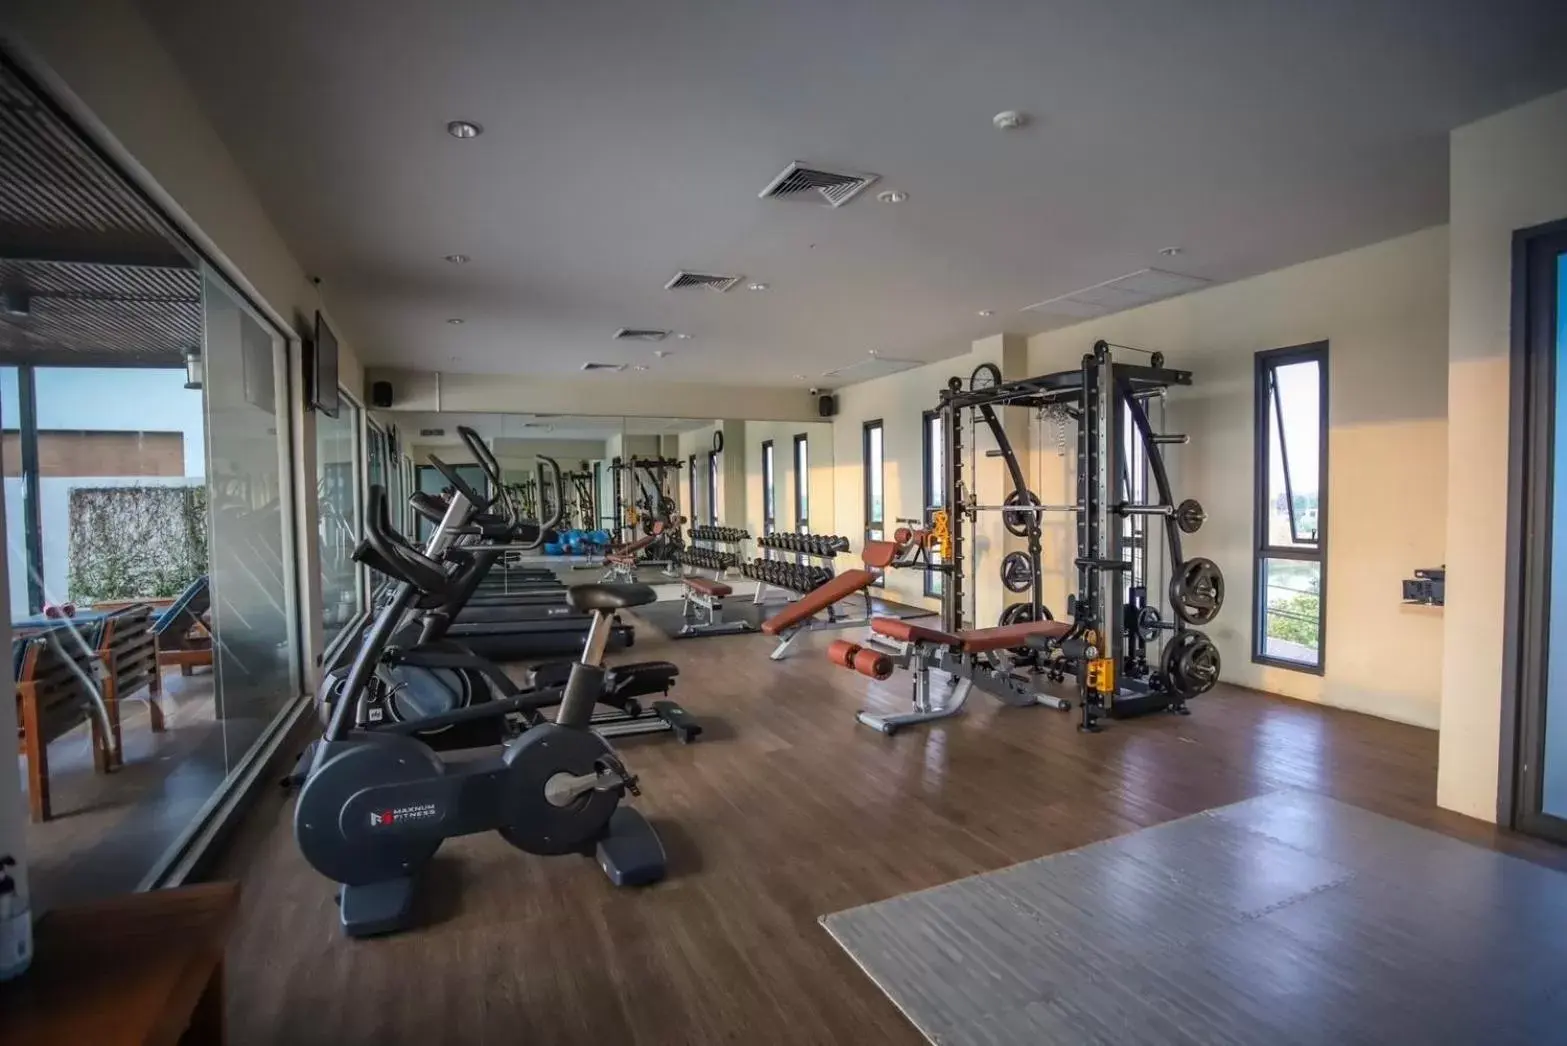 Fitness centre/facilities, Fitness Center/Facilities in The Cavalli Casa Resort